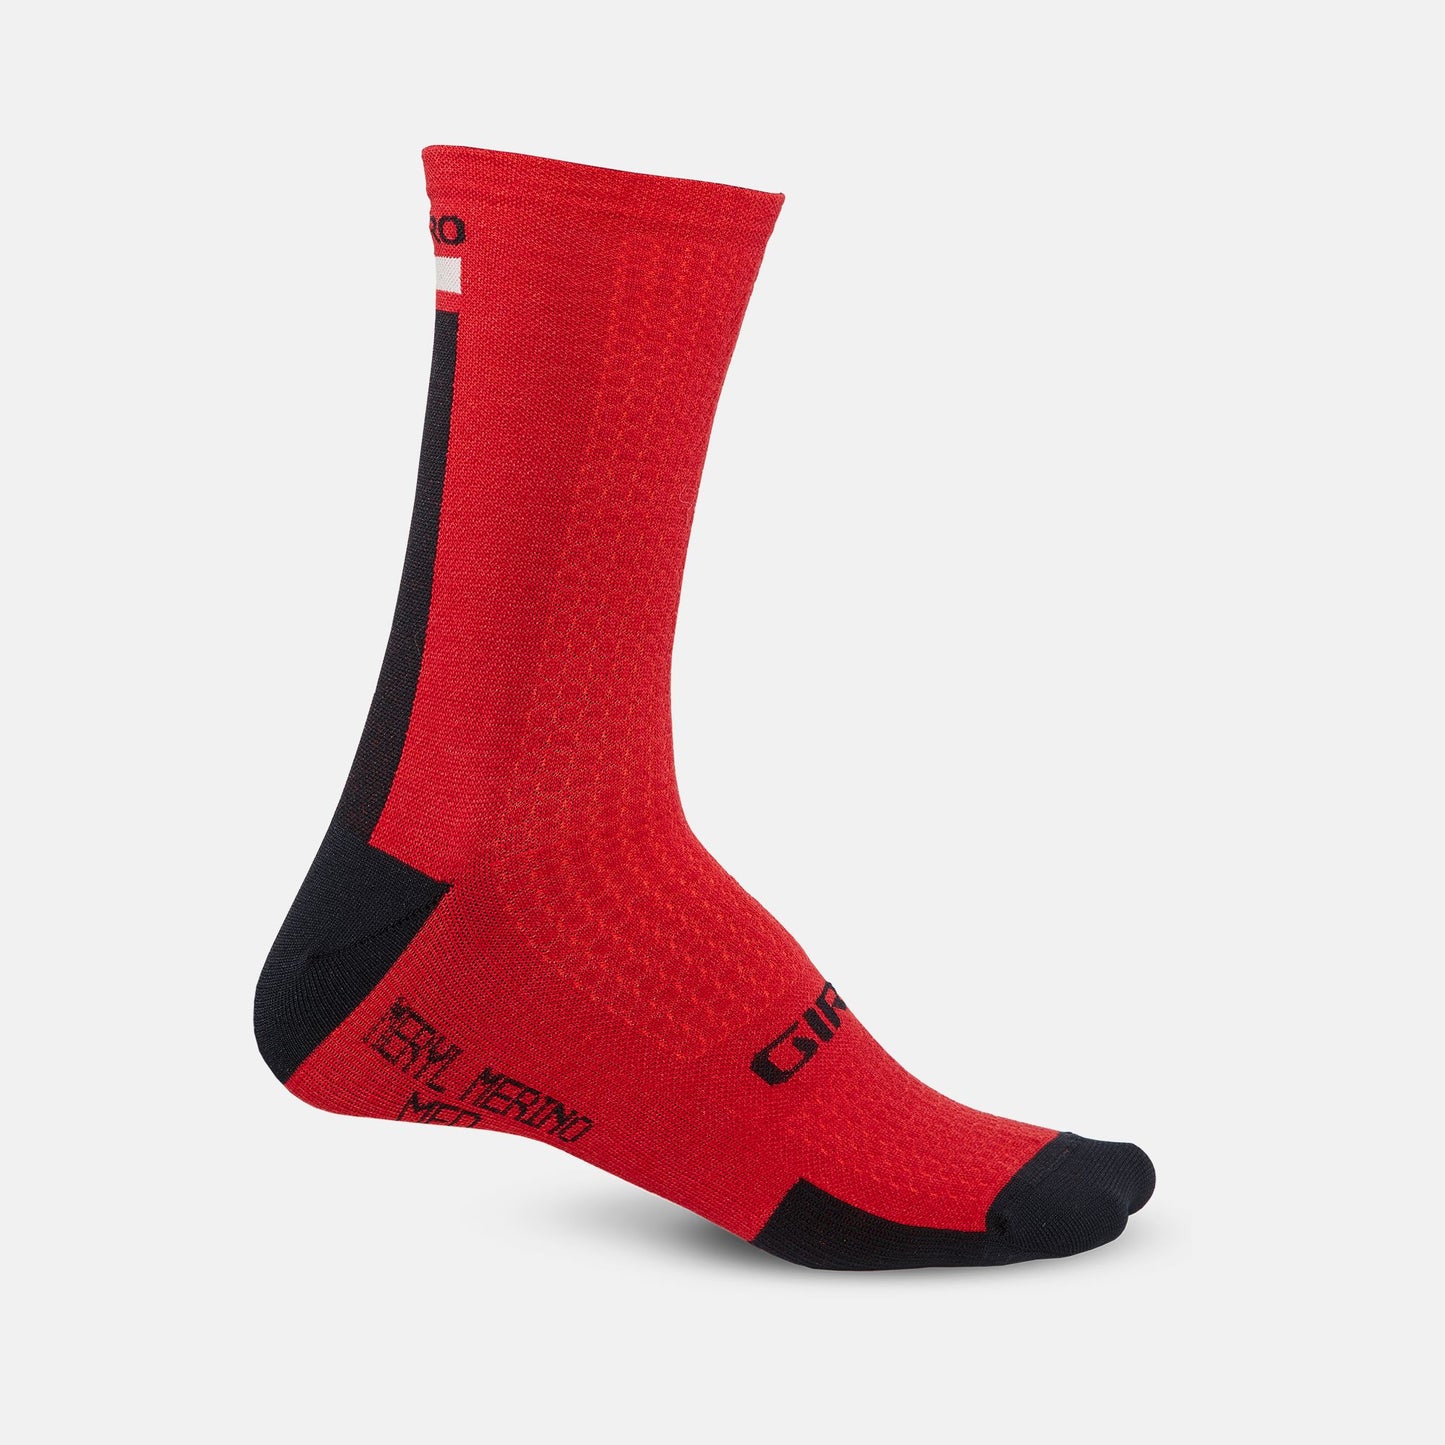 Giro HRc+ Merino Wool Socks - Dark Red/Black/Grey - Size S